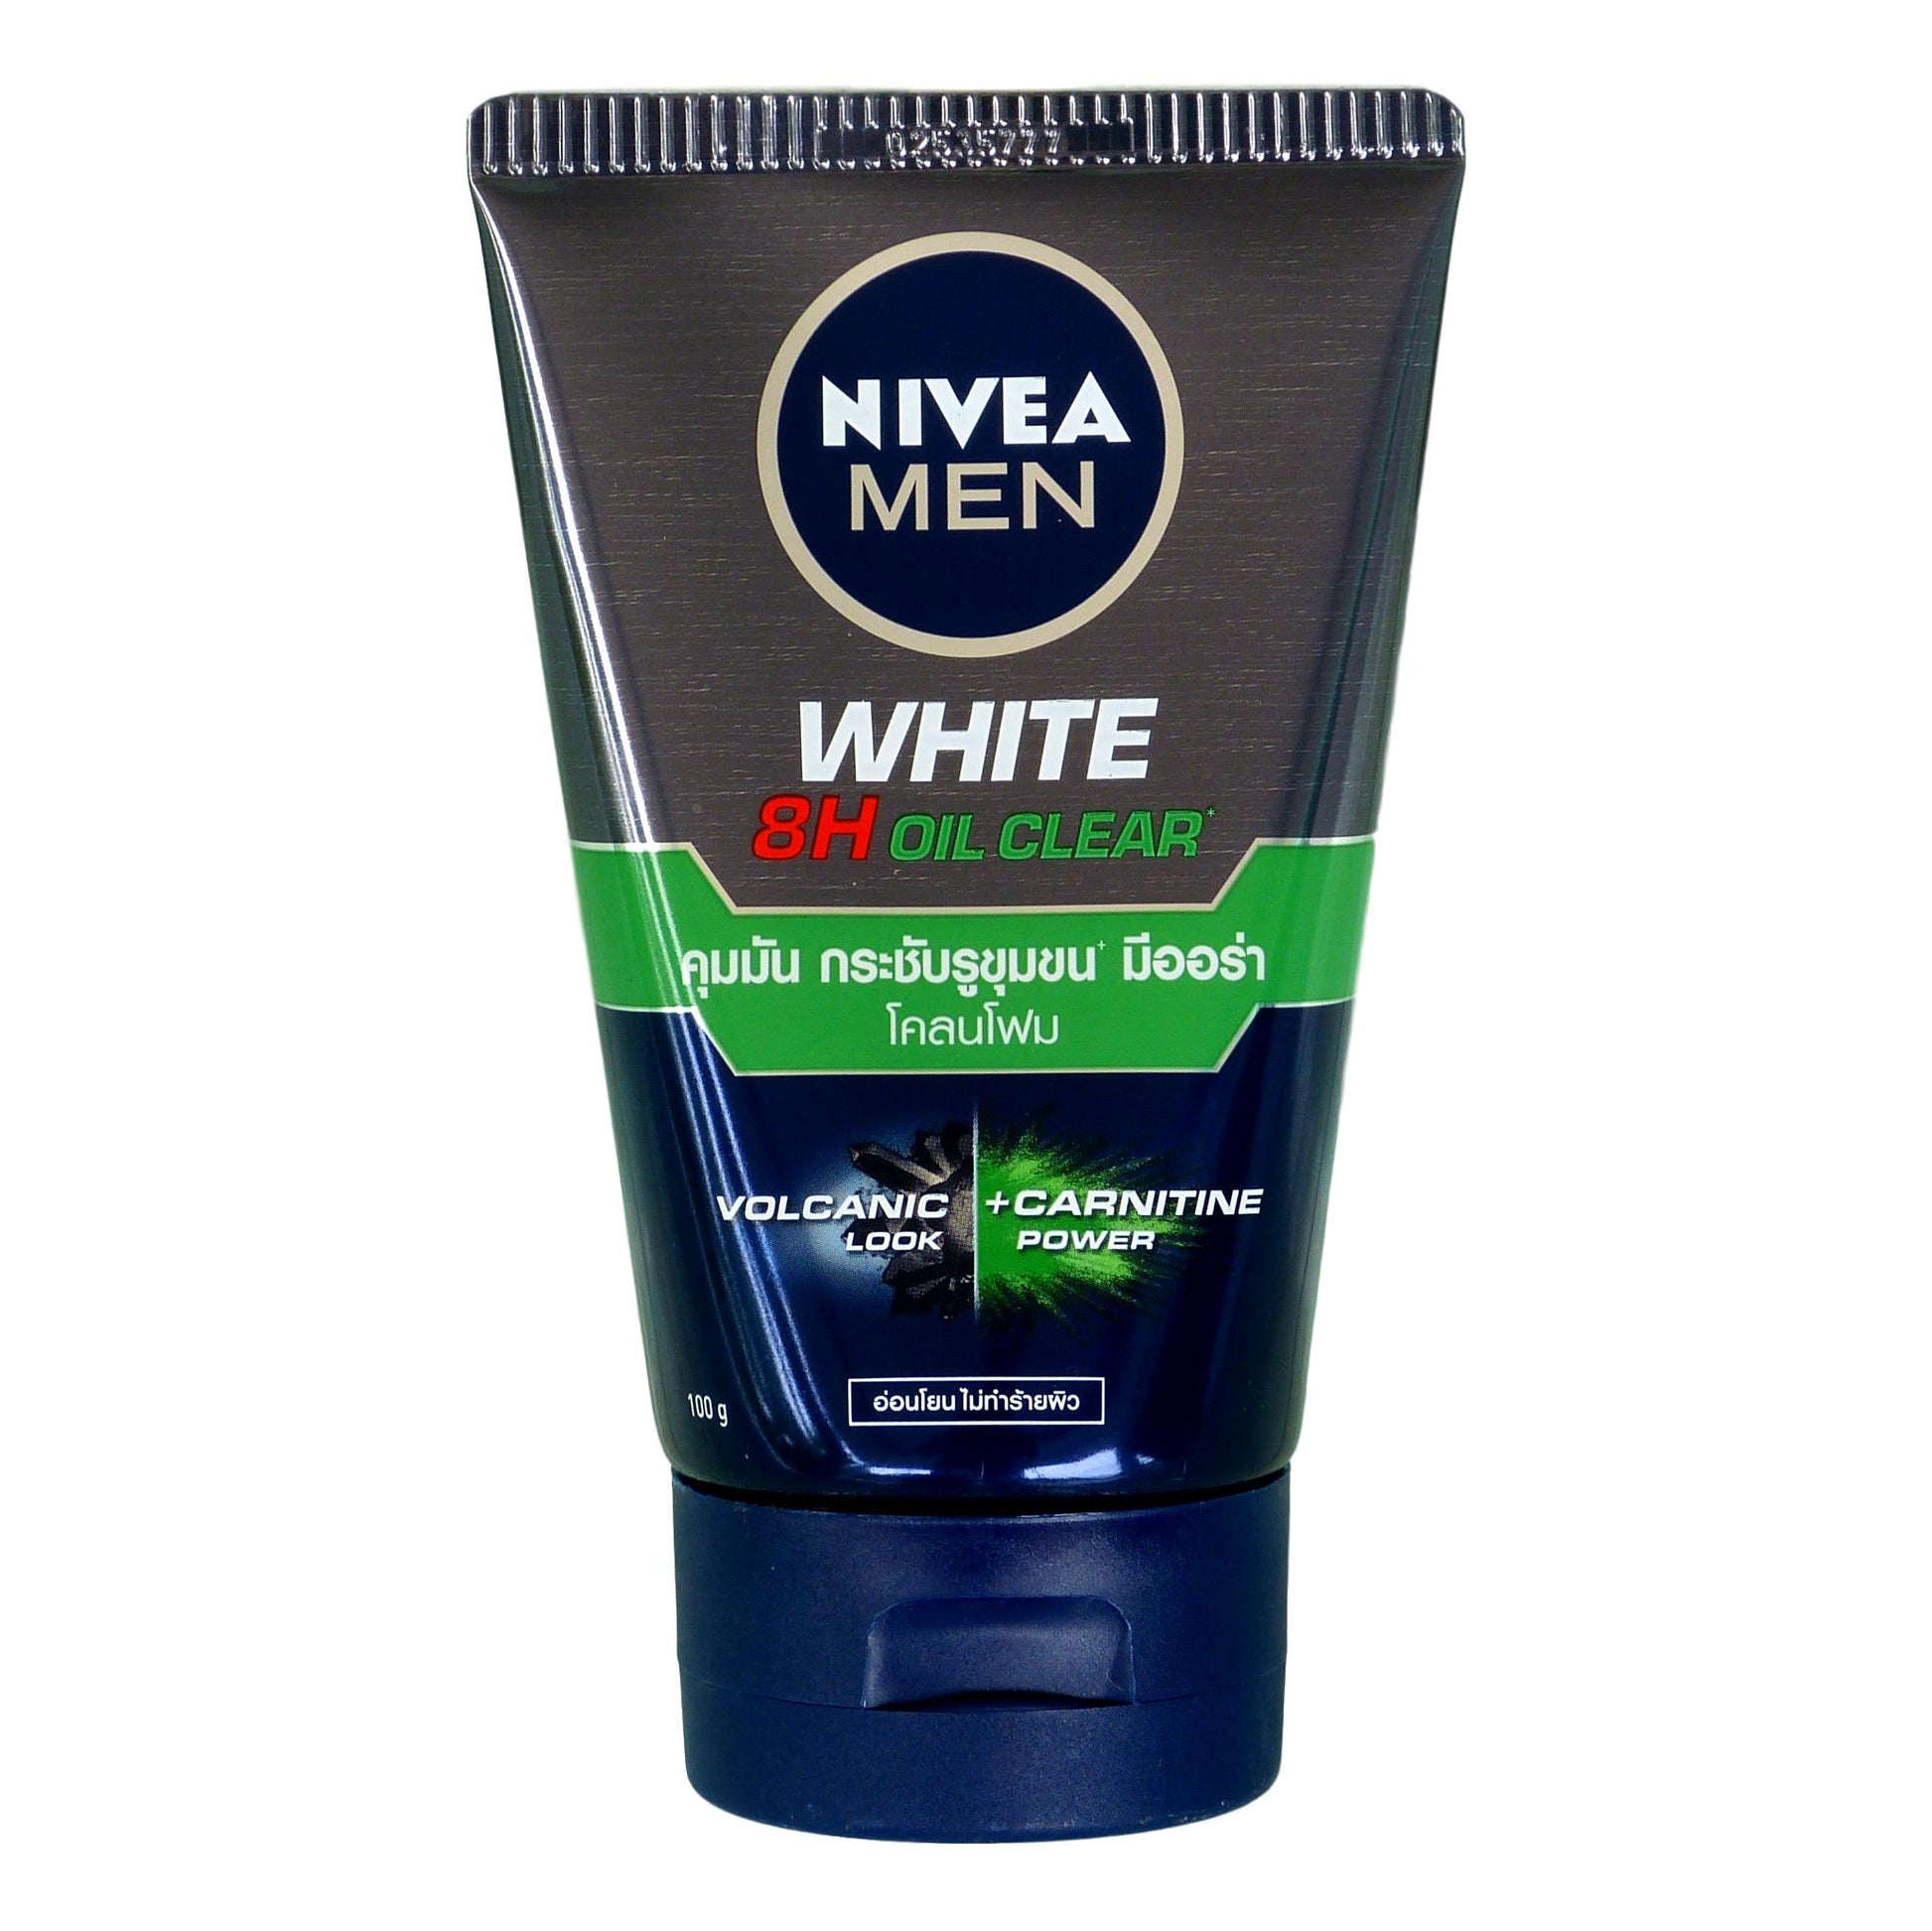 Nivea Men White Oil Clear Acne Mud Foam 100 grams - Asian Beauty Supply